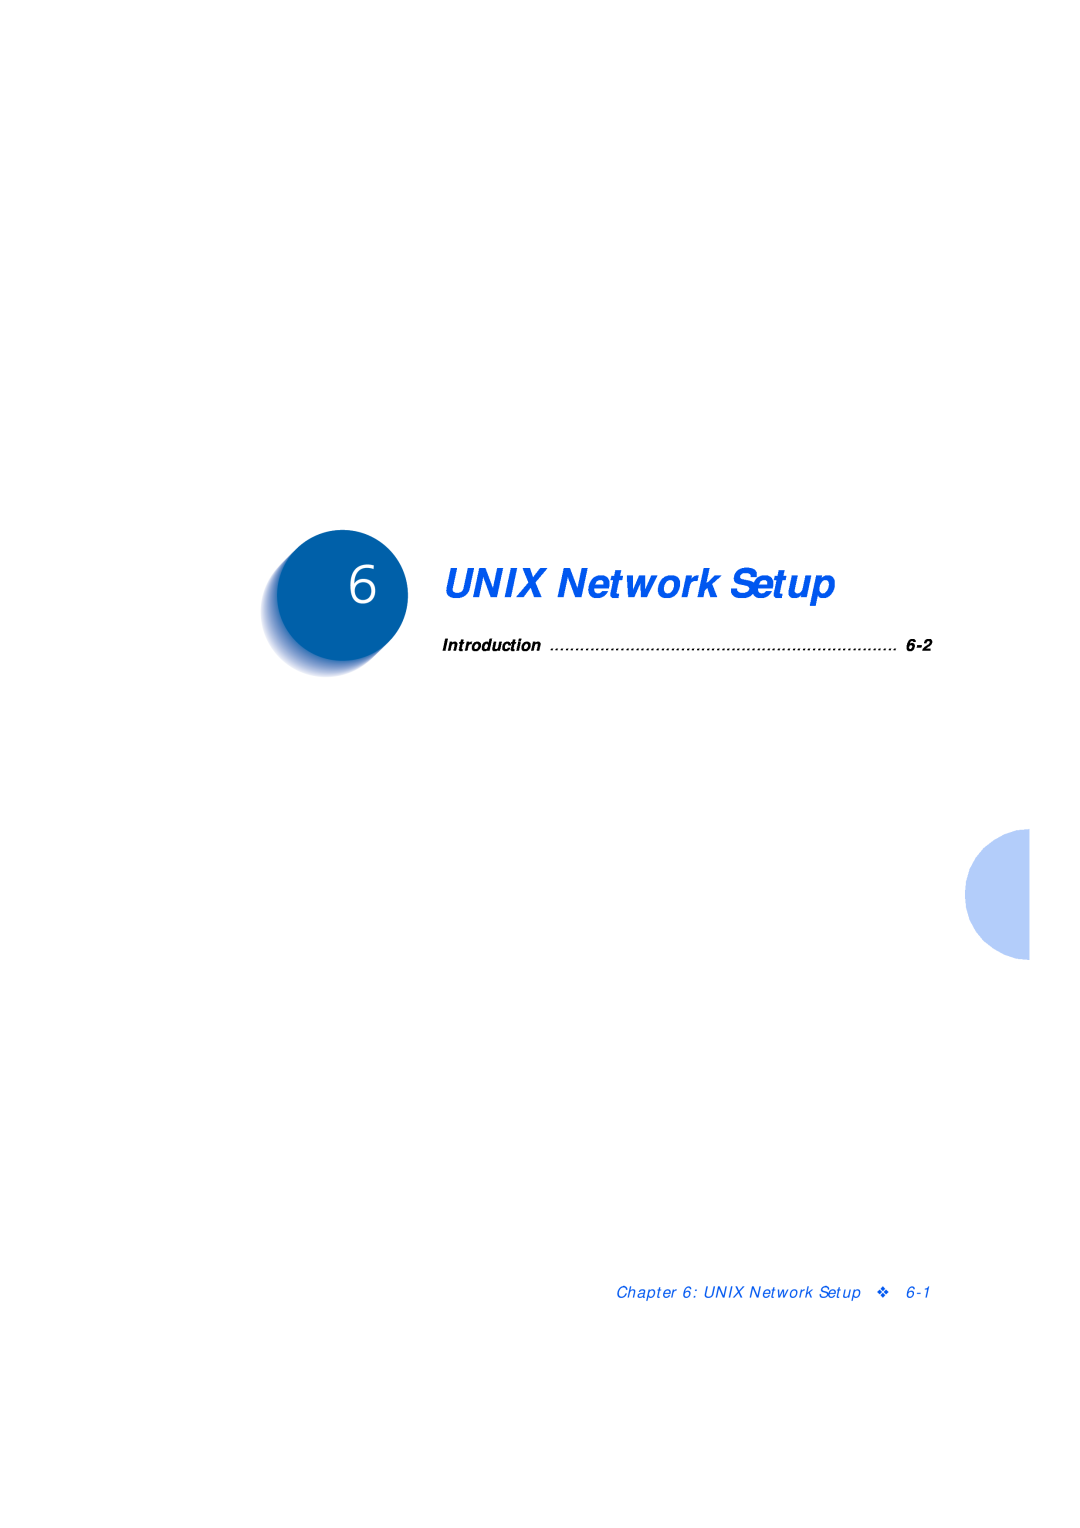 Xerox Network Laser Printers manual UNIX Network Setup, Introduction 